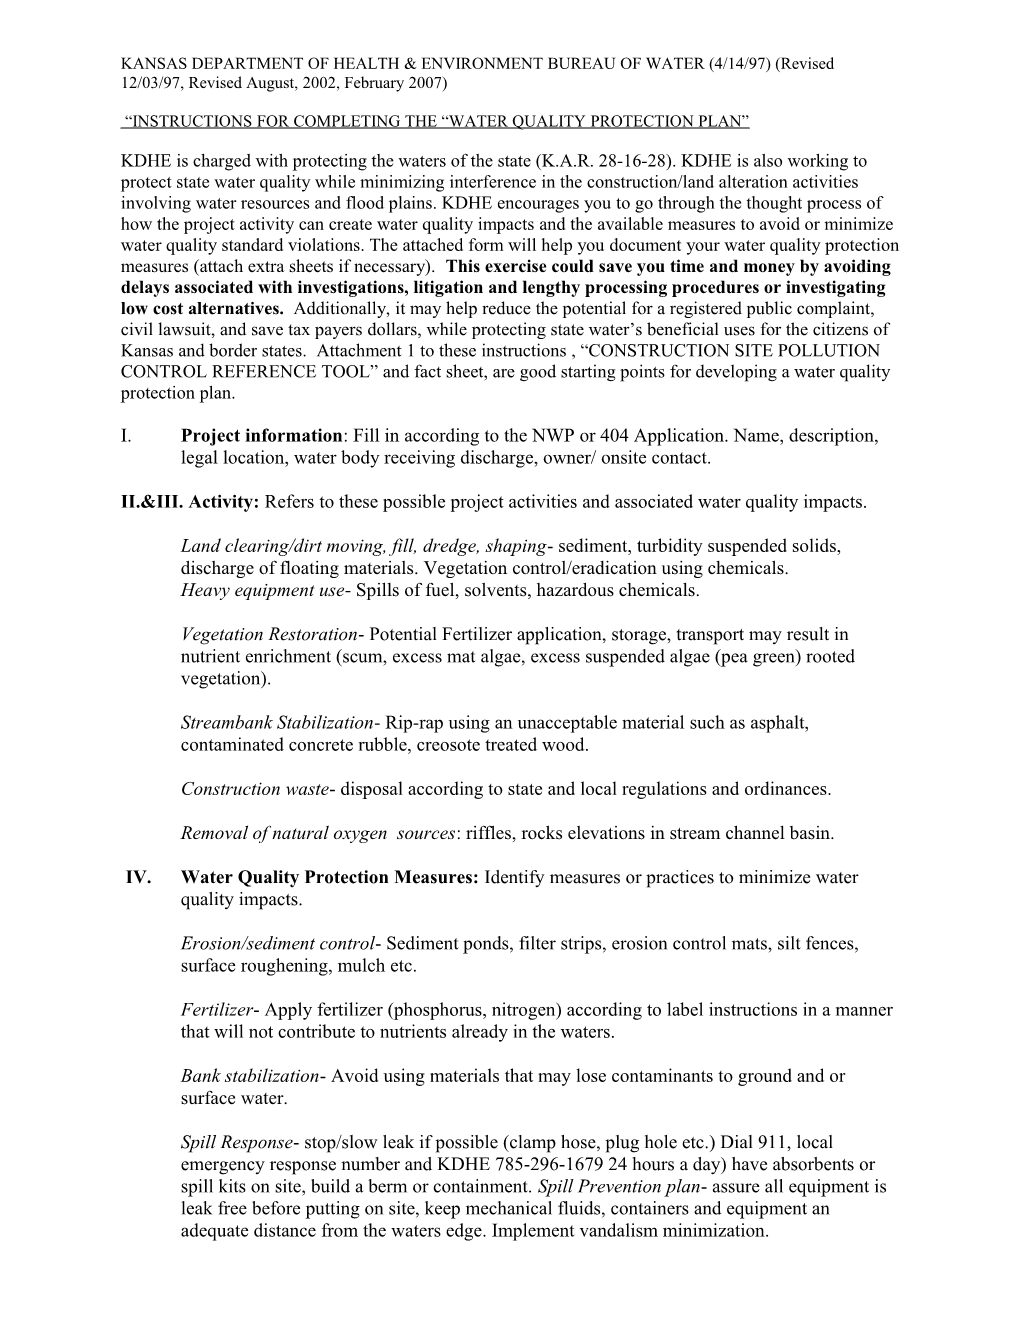 KANSAS DEPARTMENT of HEALTH & ENVIRONMENT BUREAU of WATER (4/14/97) (Revised 12/03/97